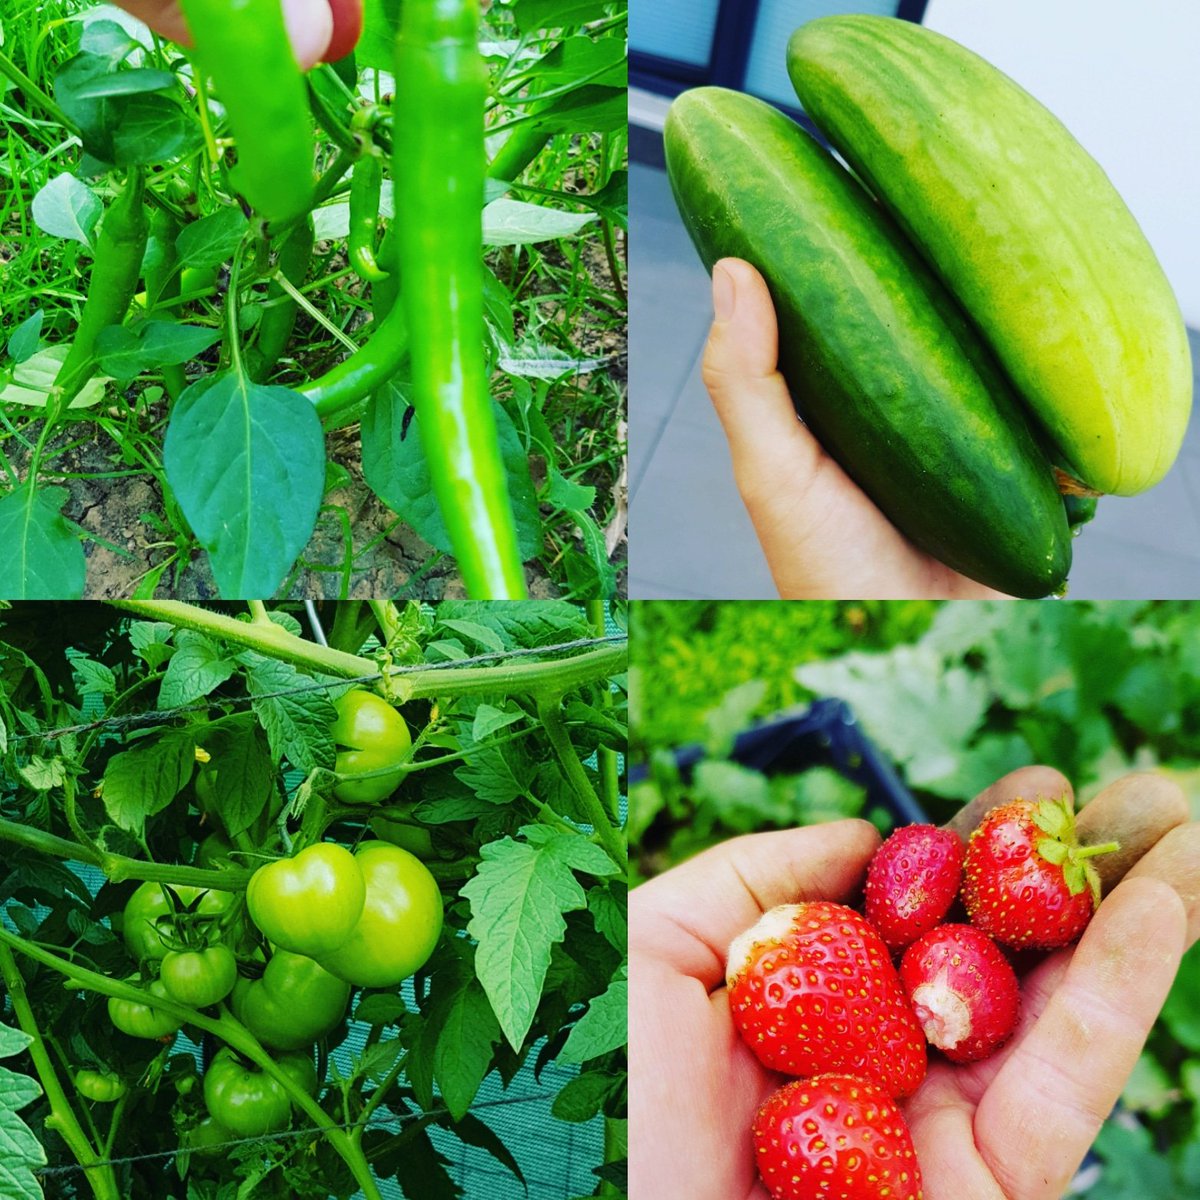 I am so #happy. My #plants are #amazing & #delicious 😍🍅🍓🥒🌶
.
#deliciousfood #fresh #healthyfood #healthy #tasty #tastyfood #fantasticfood #fantastik #fantastik #selfmade #selbstangebaut #tomaten #tomato #tomatoes #chili #cucumber #gurke #strawberry #erdbeeren #yummy #yummi